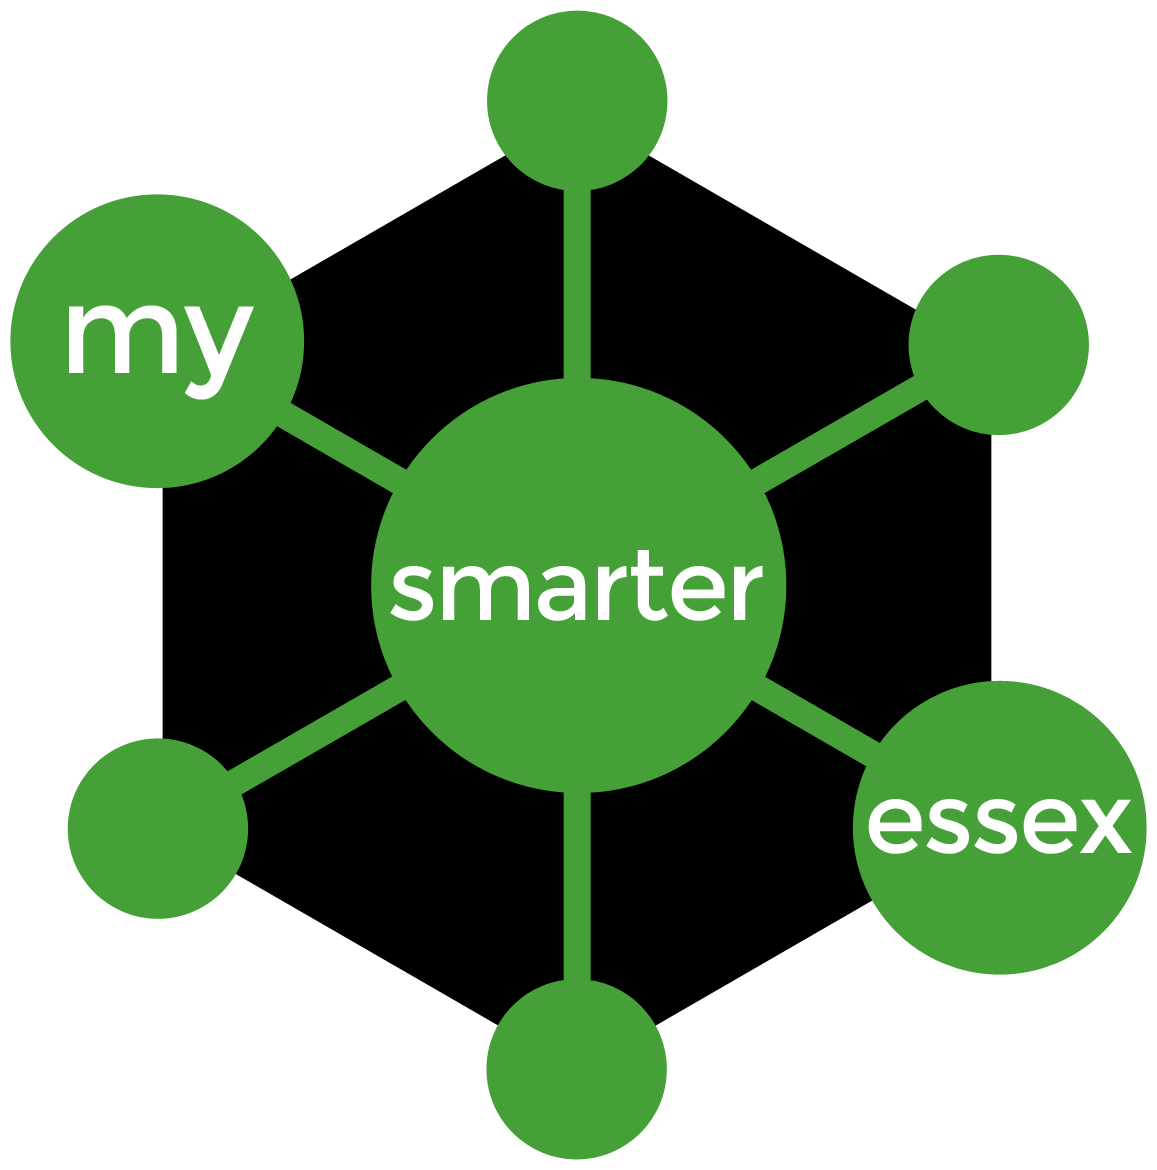 my_smarter_essex_green_hex.png